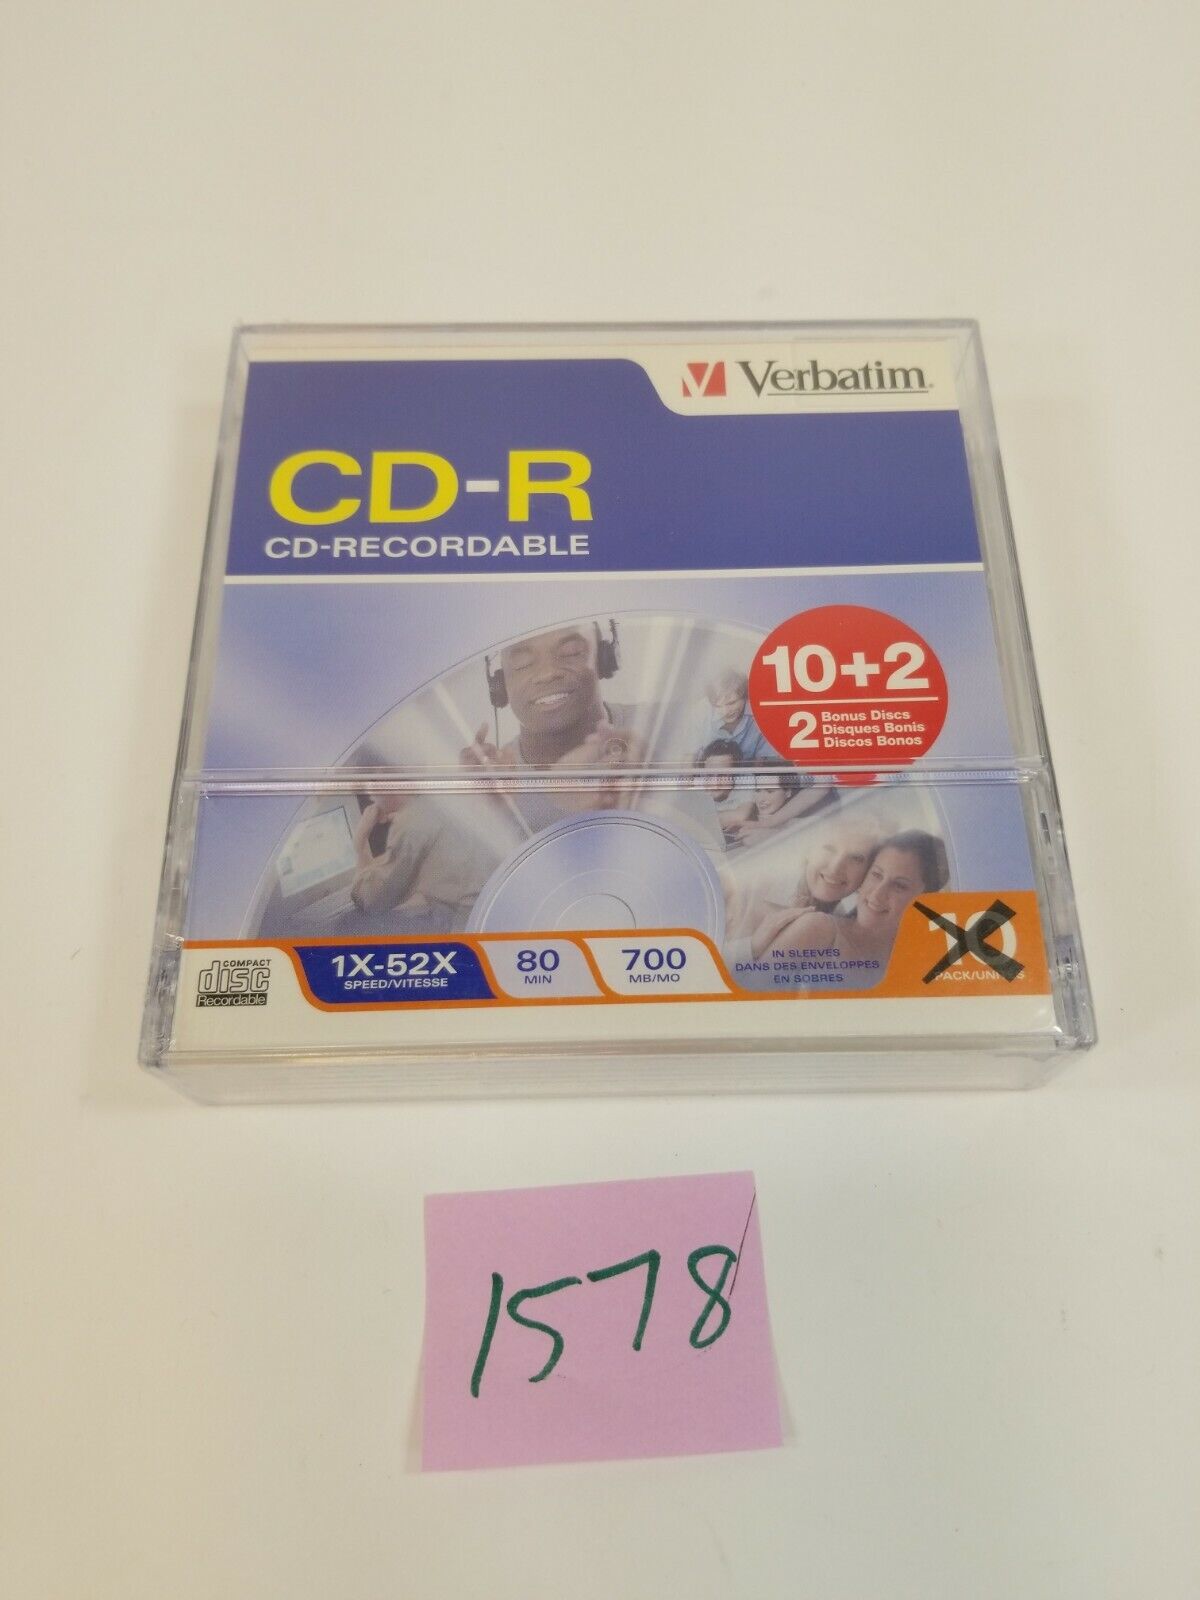 Verbatim CD-R CD-Recordable 1x-52x 80 min 700 mb Unopened NEW Qty 12 Discs 